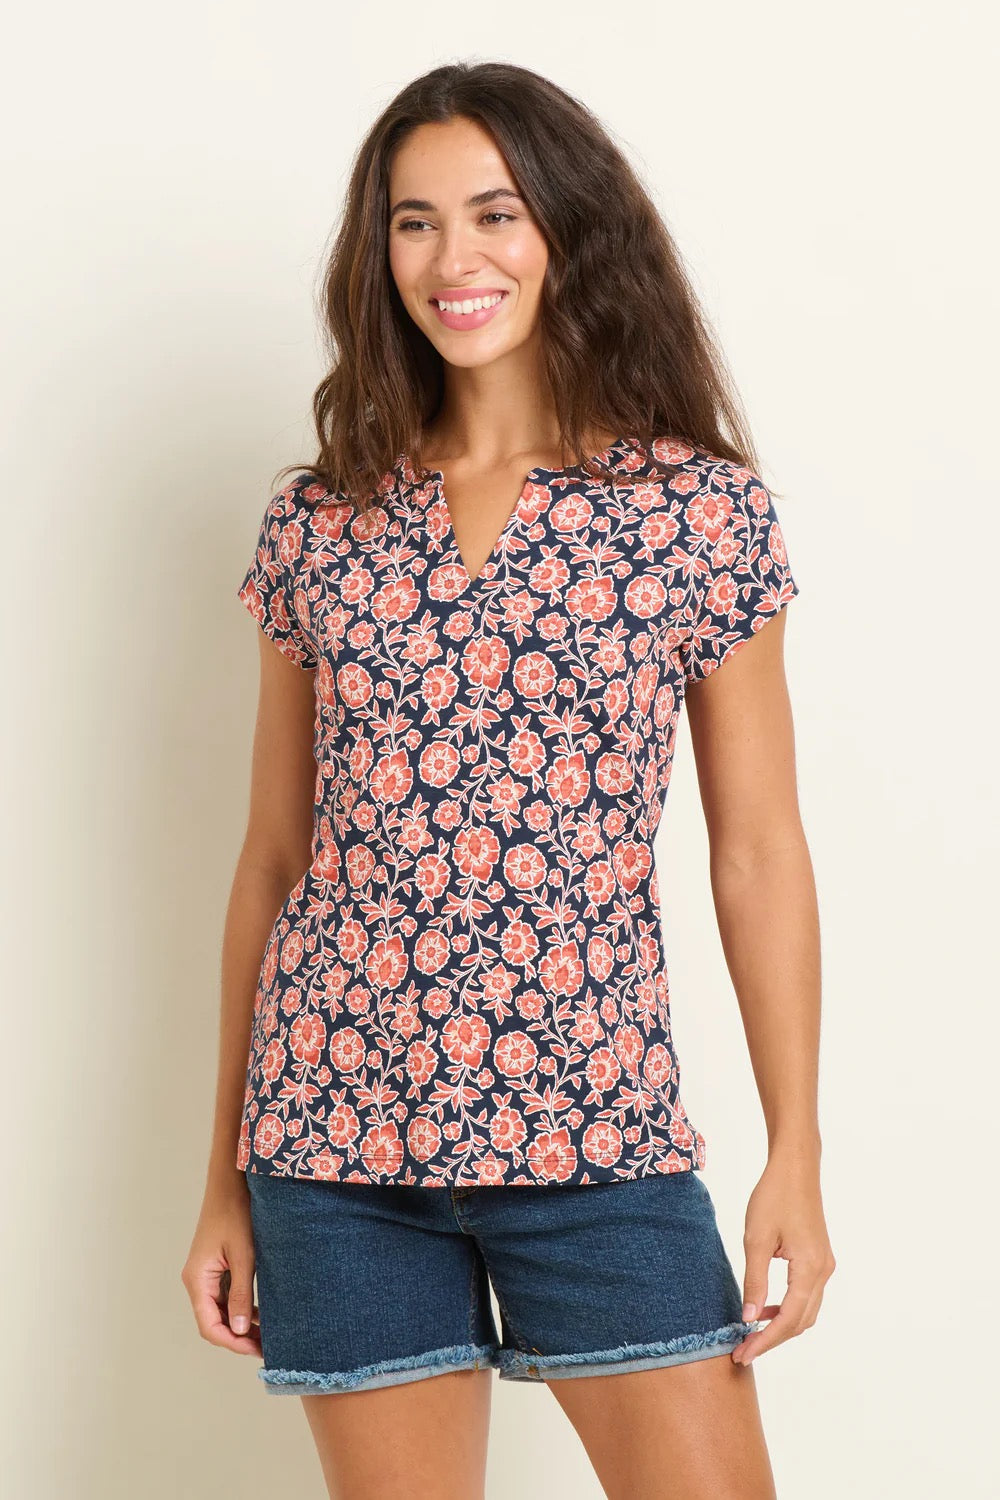 Brakeburn Women's Boho Floral T-Shirt - Multi